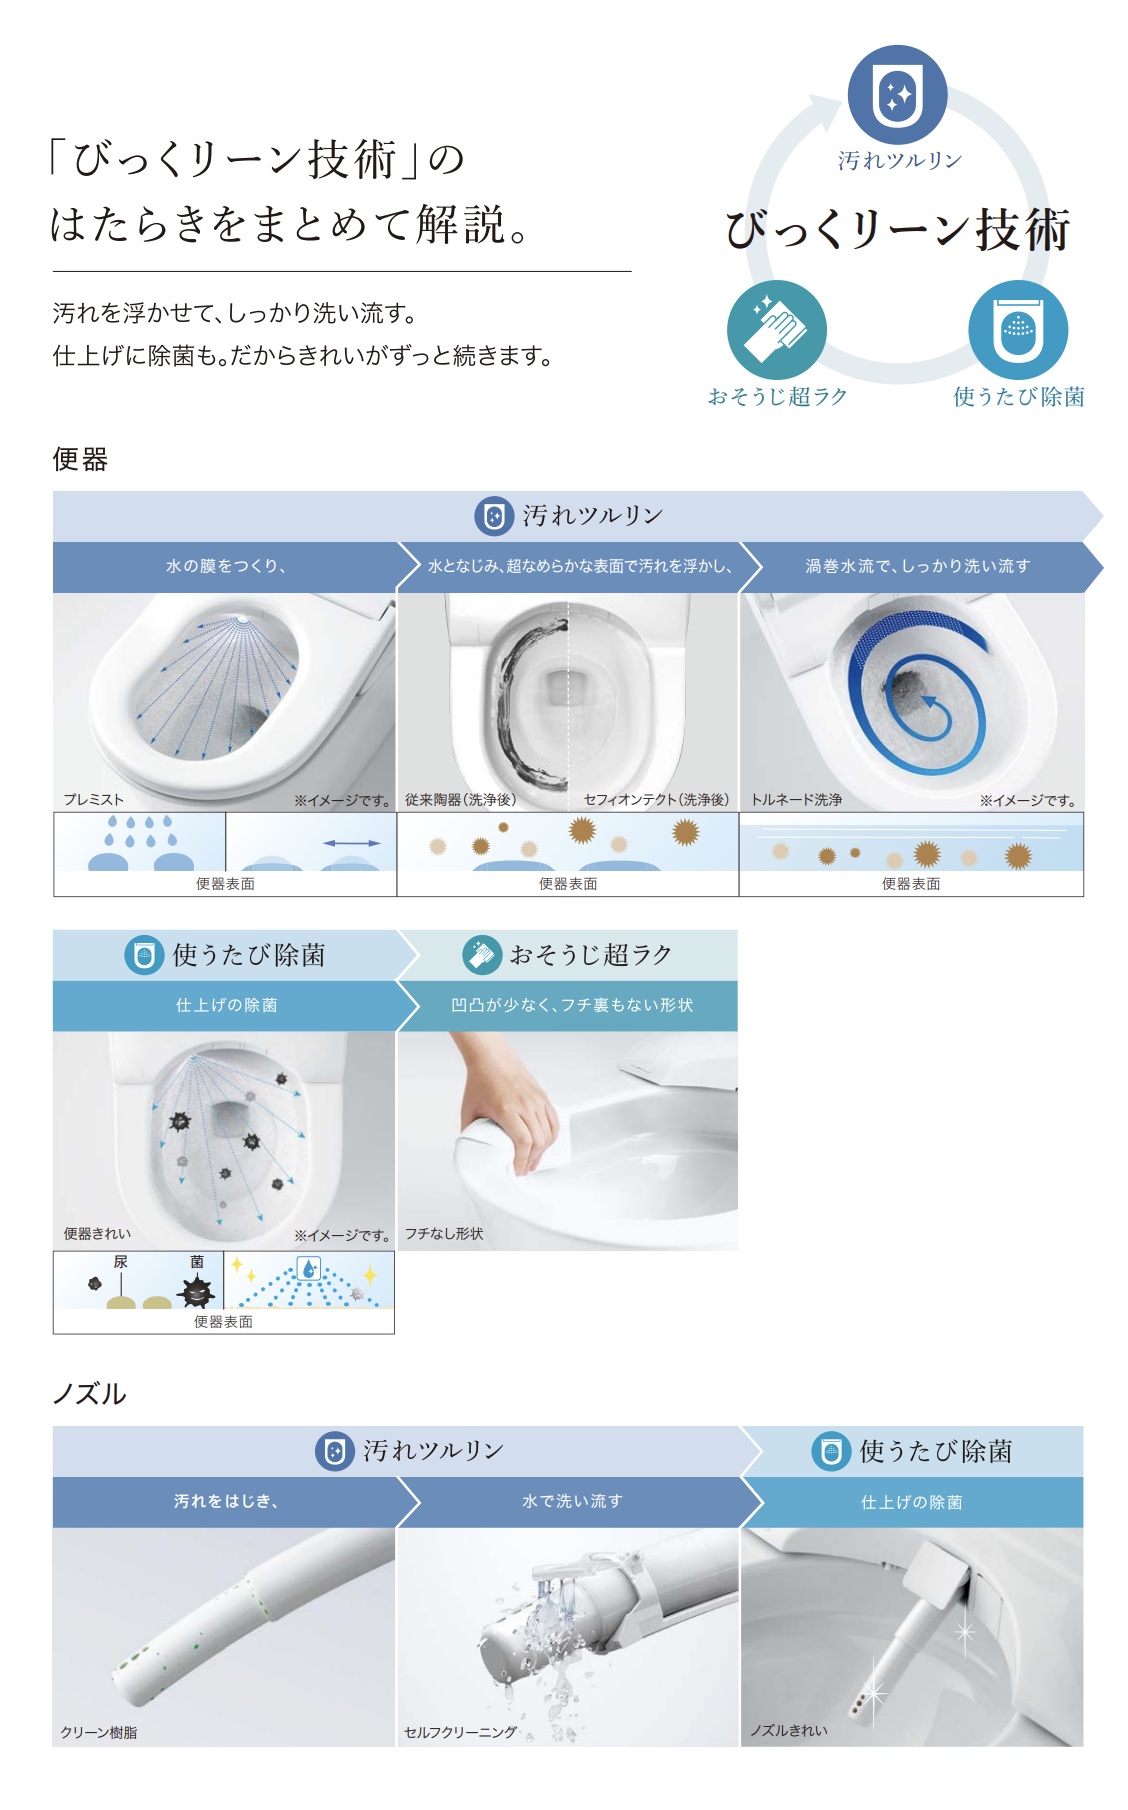 CES9520のトイレきれいの技術